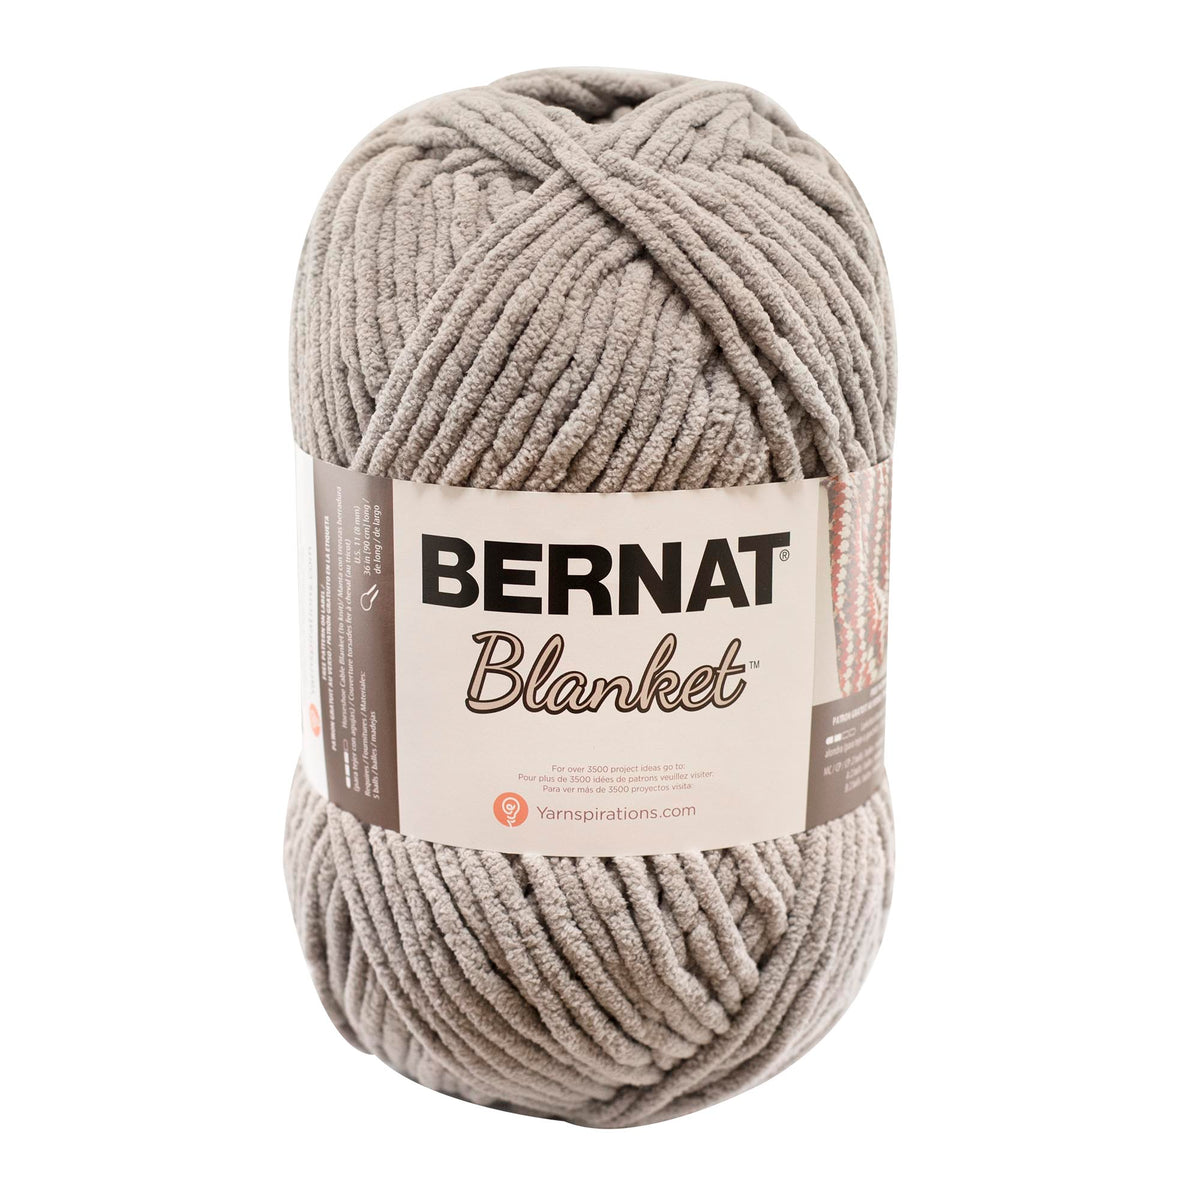  Bernat Blanket Coal Yarn - 2 Pack of 300g/10.5oz